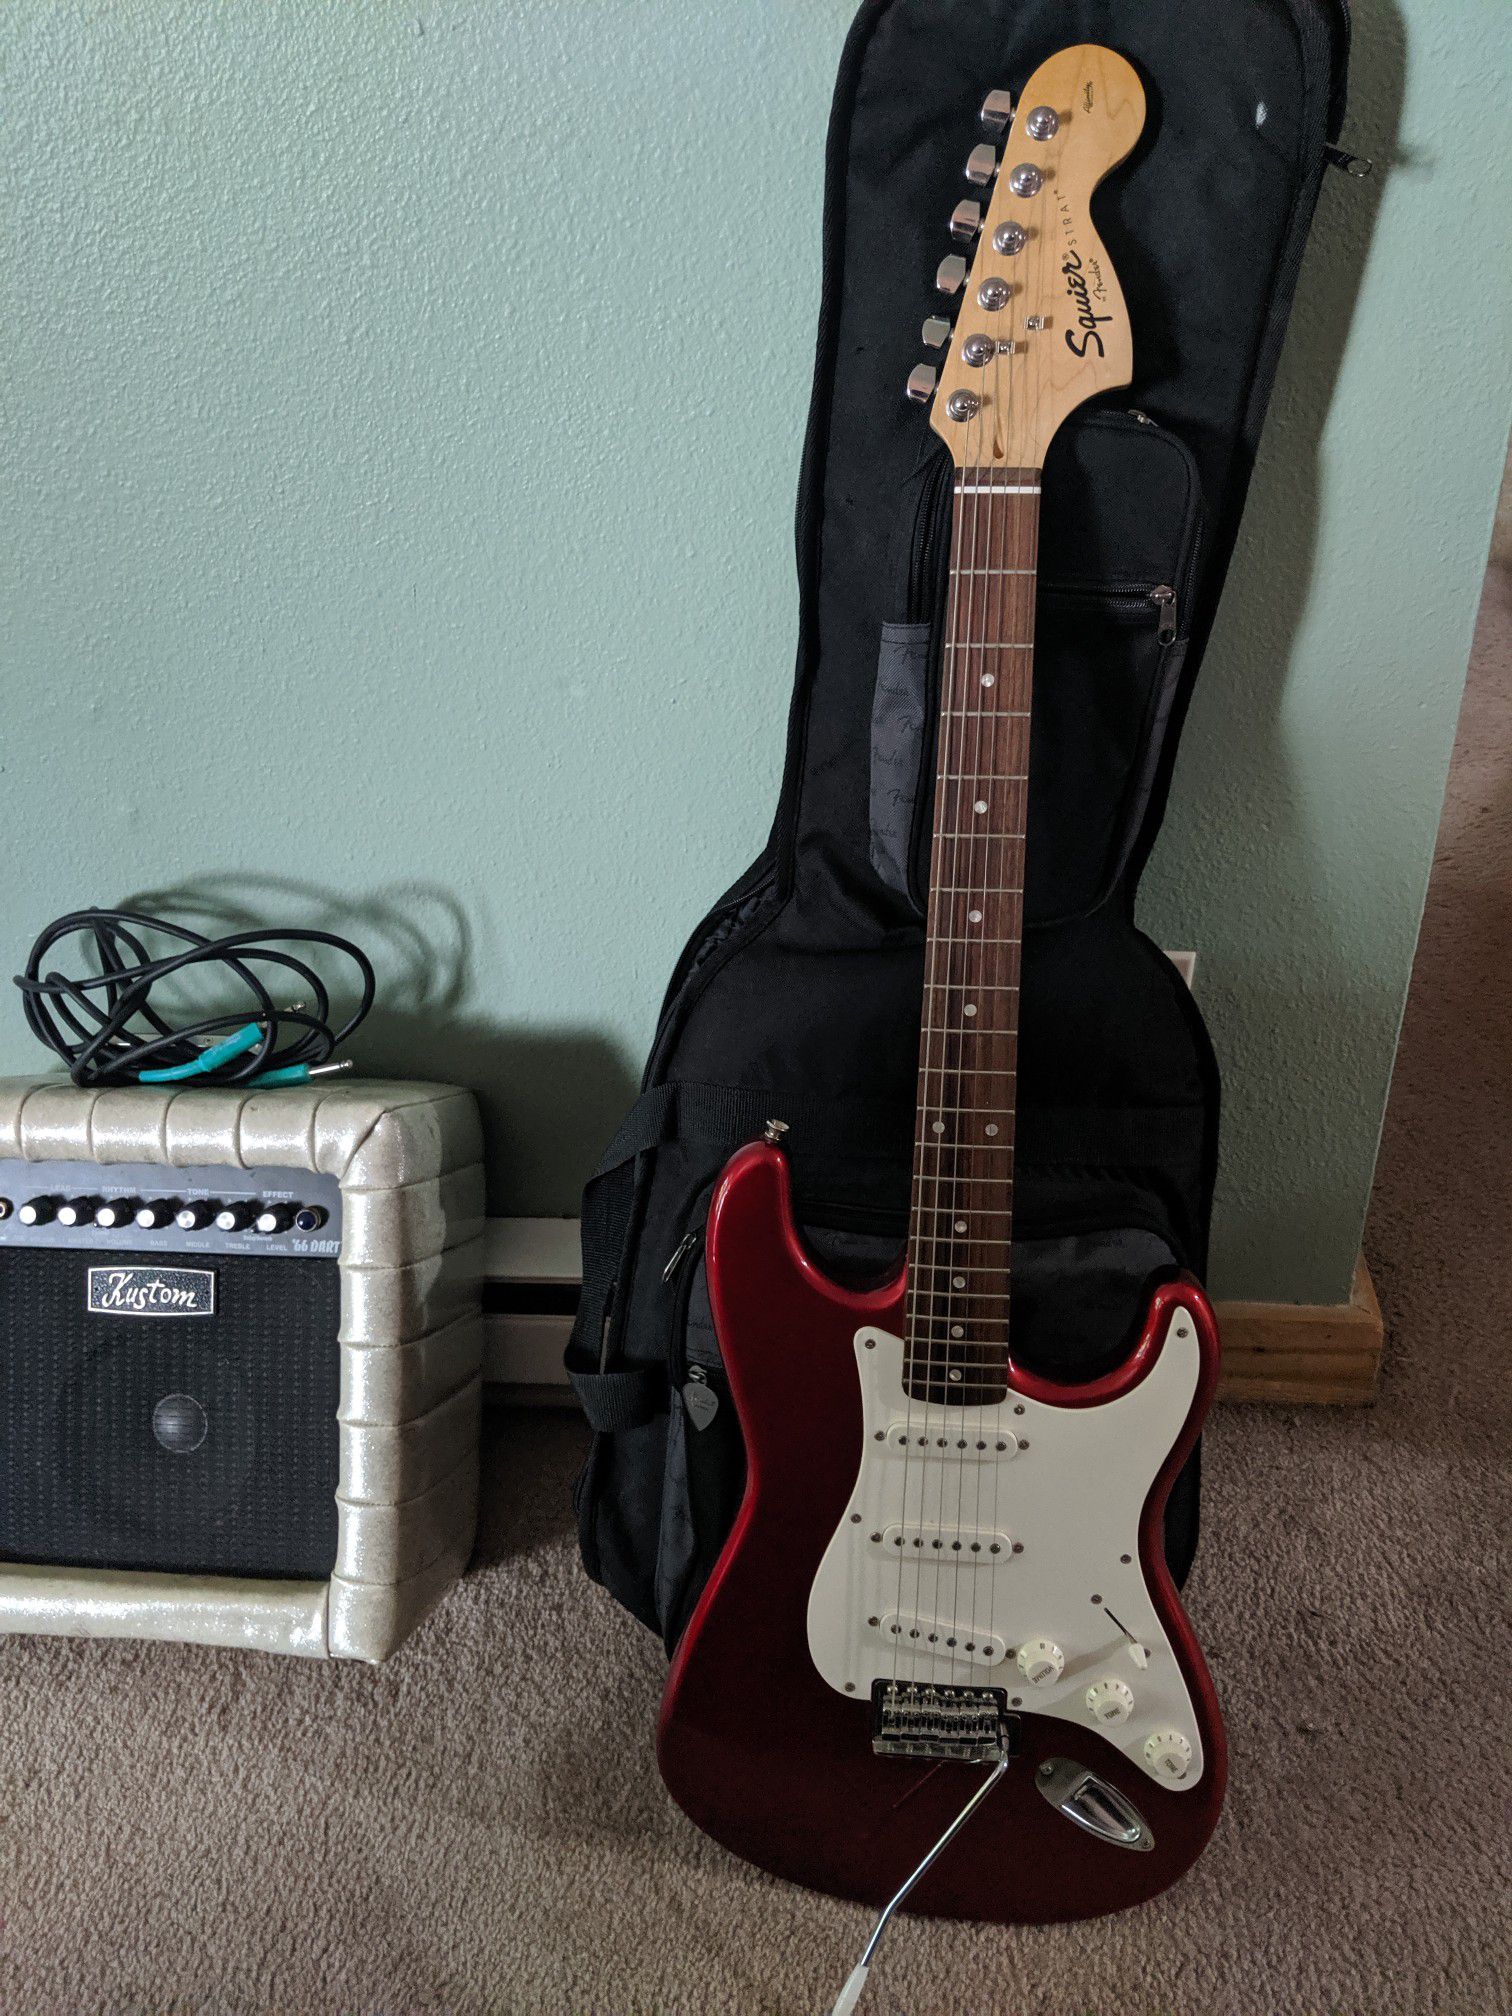 Guitar Amp set up